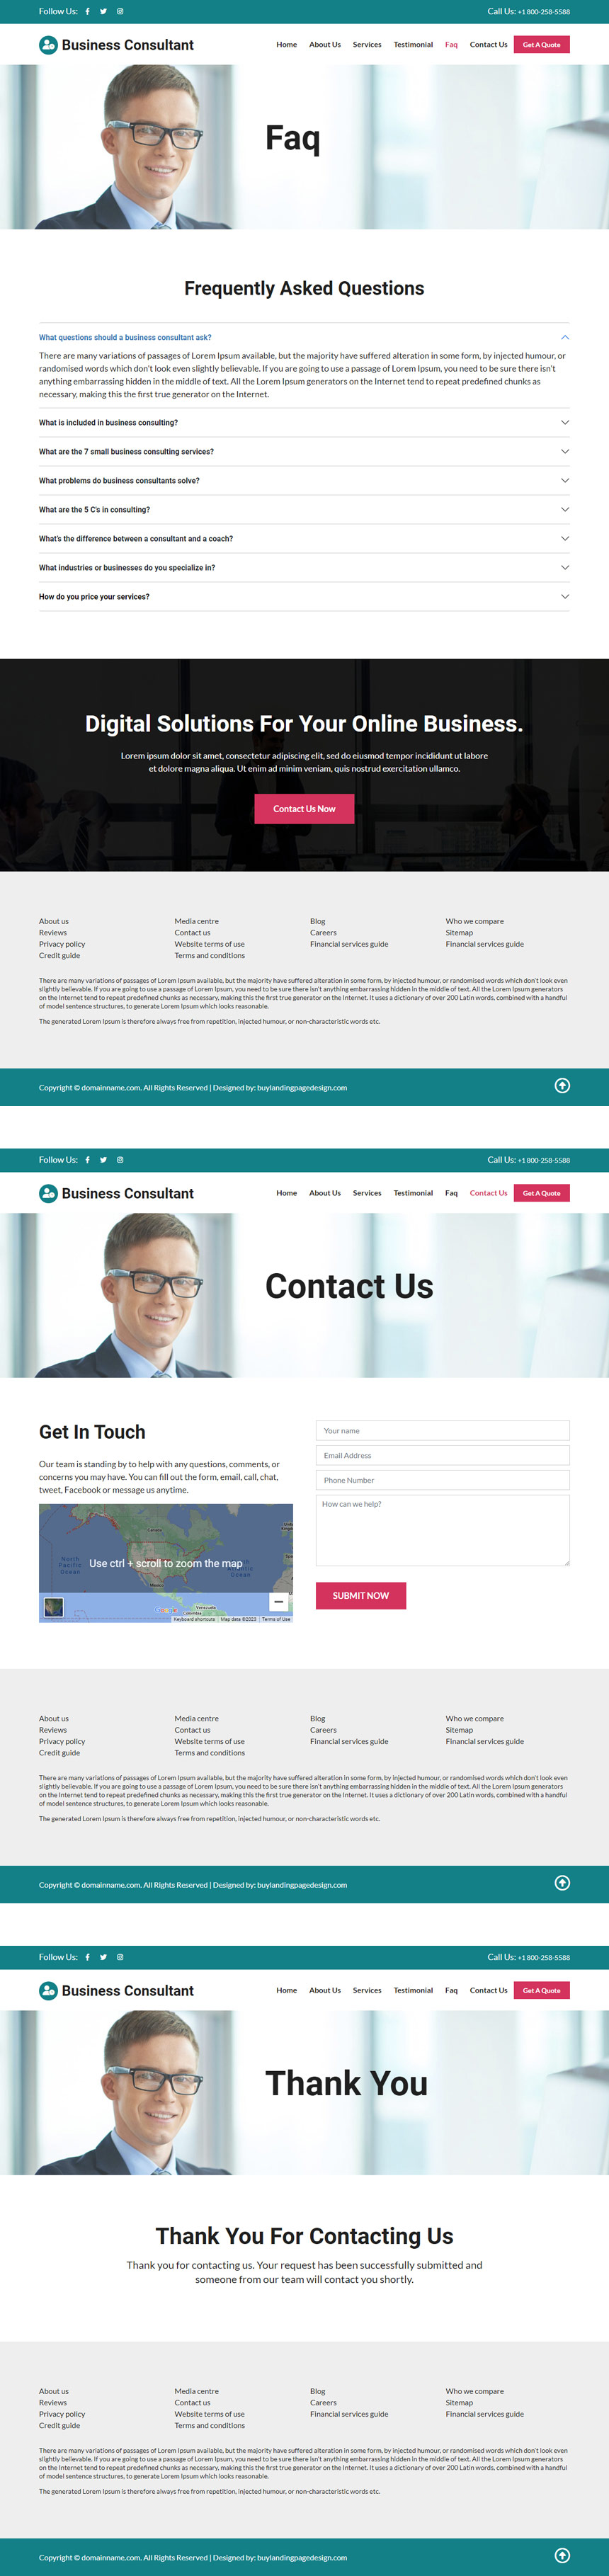 business consultant responsive website design